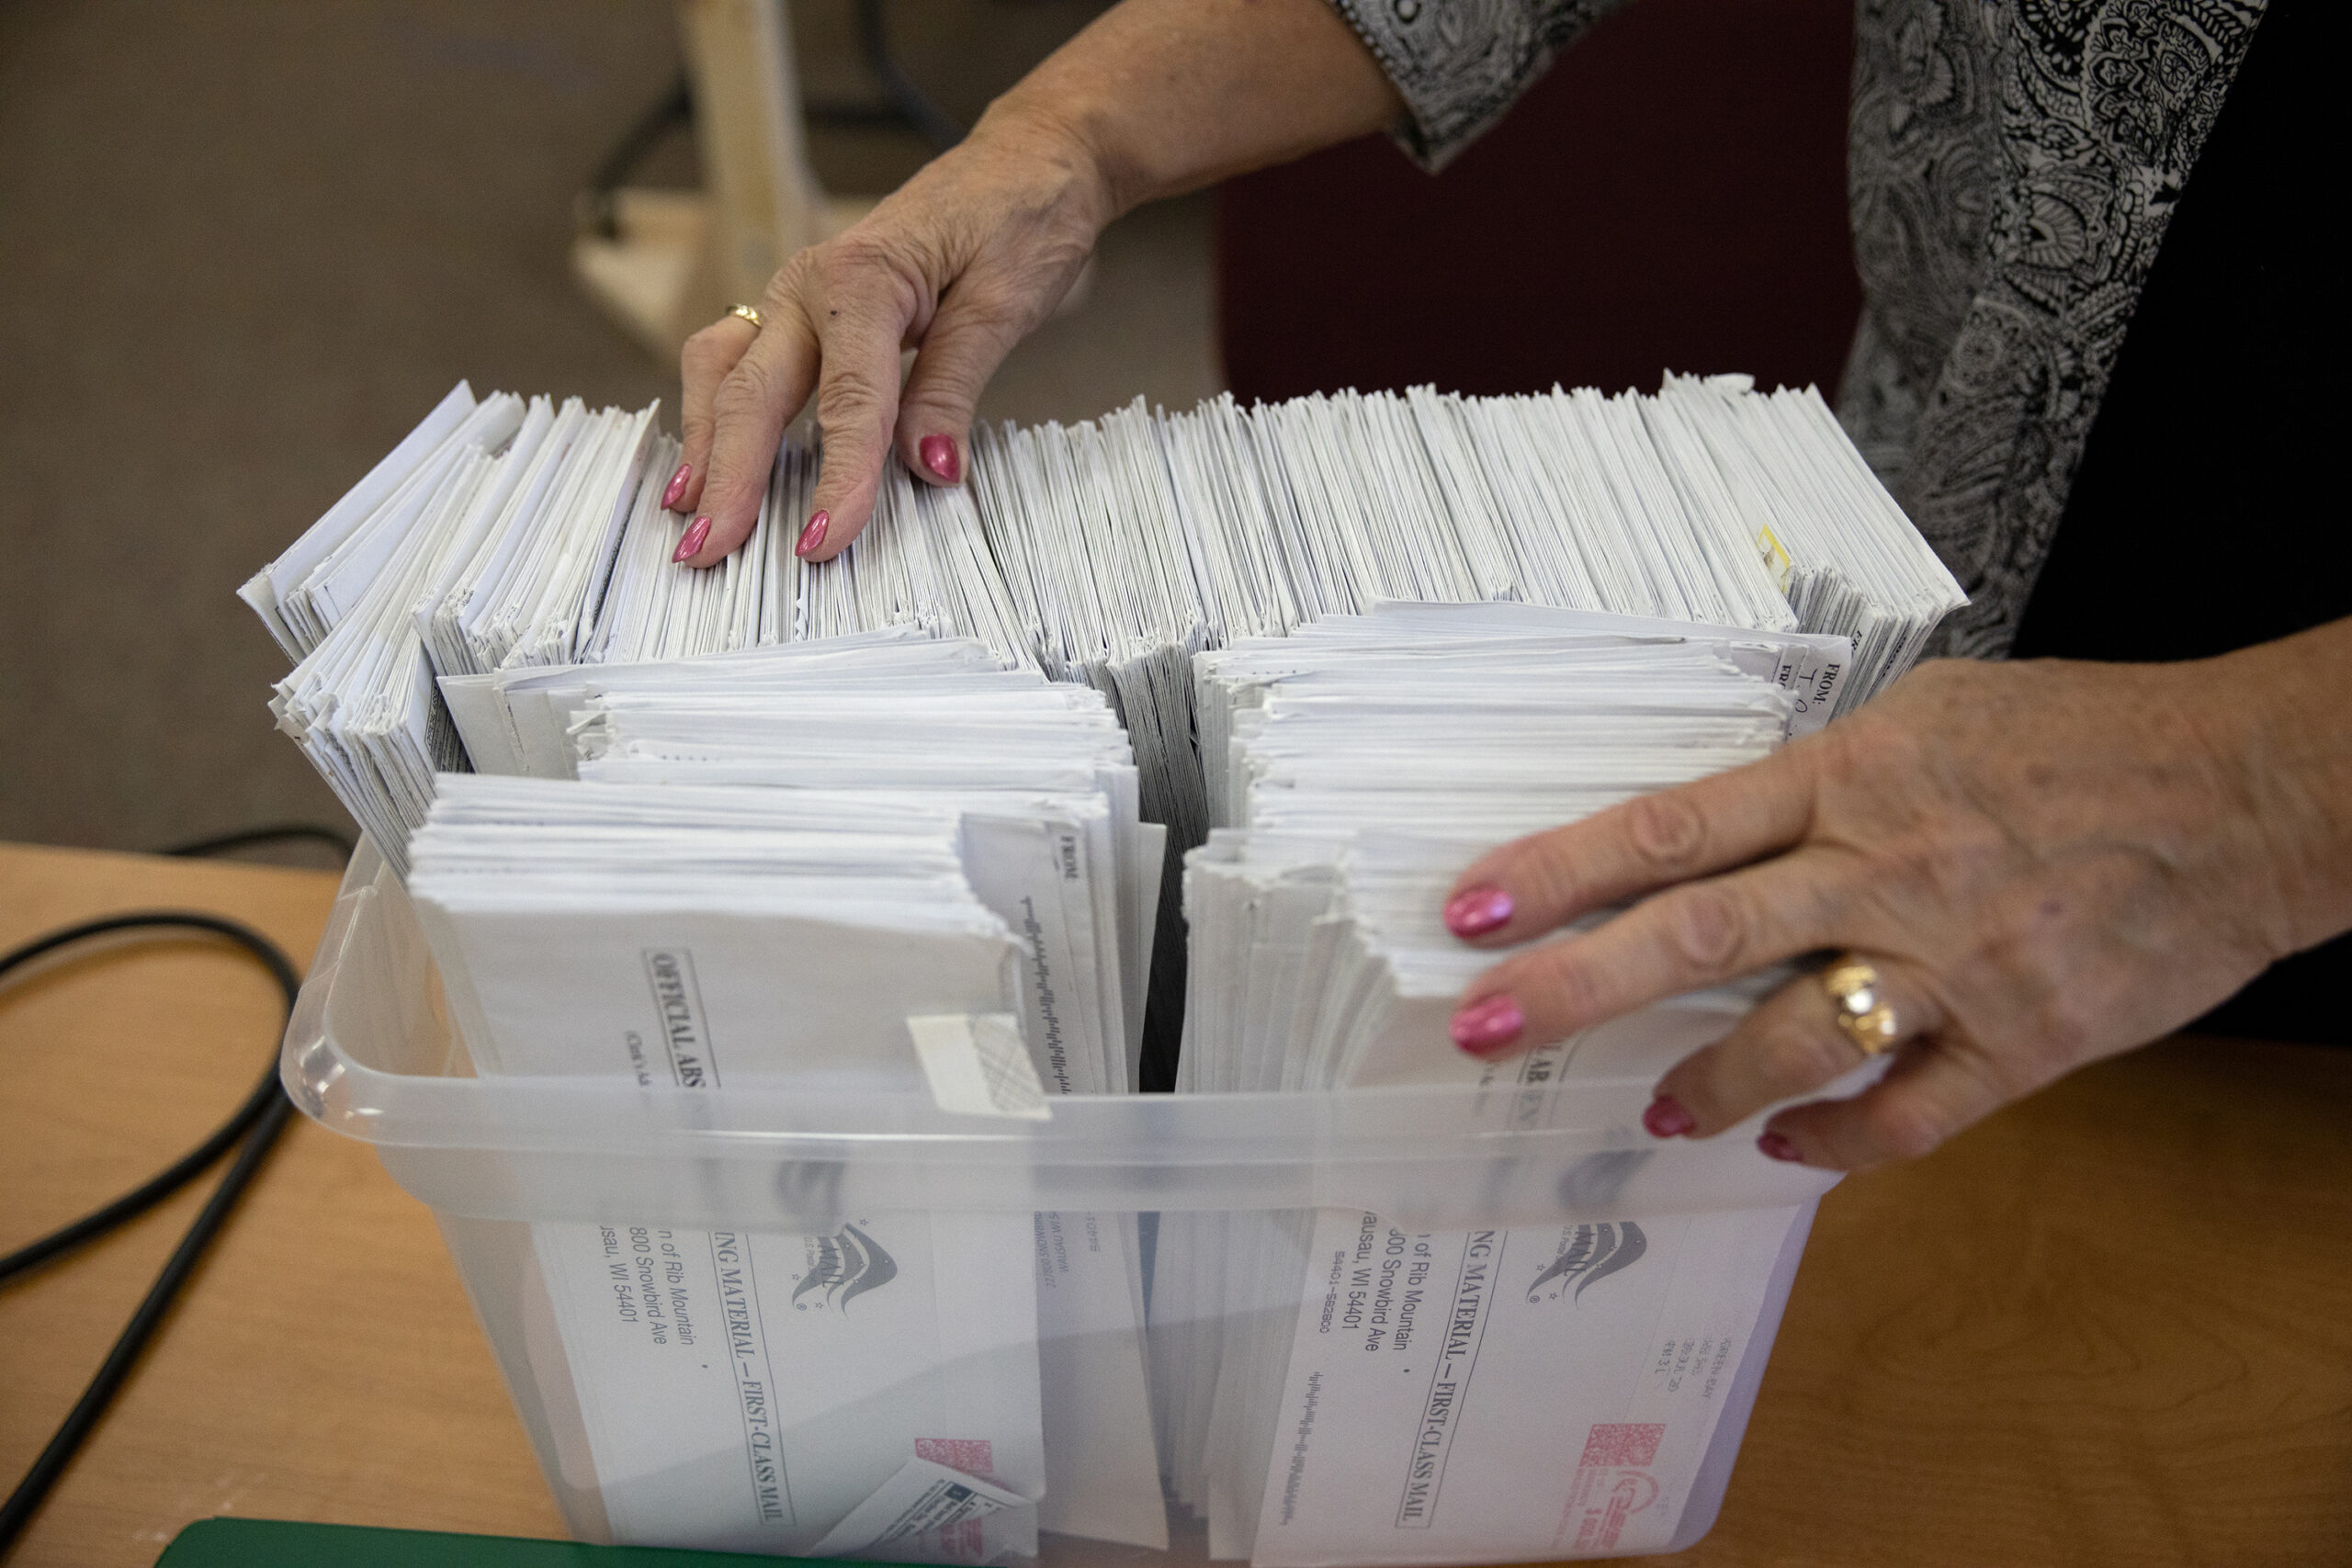 election inspector alphabetizes and organizes absentee ballots